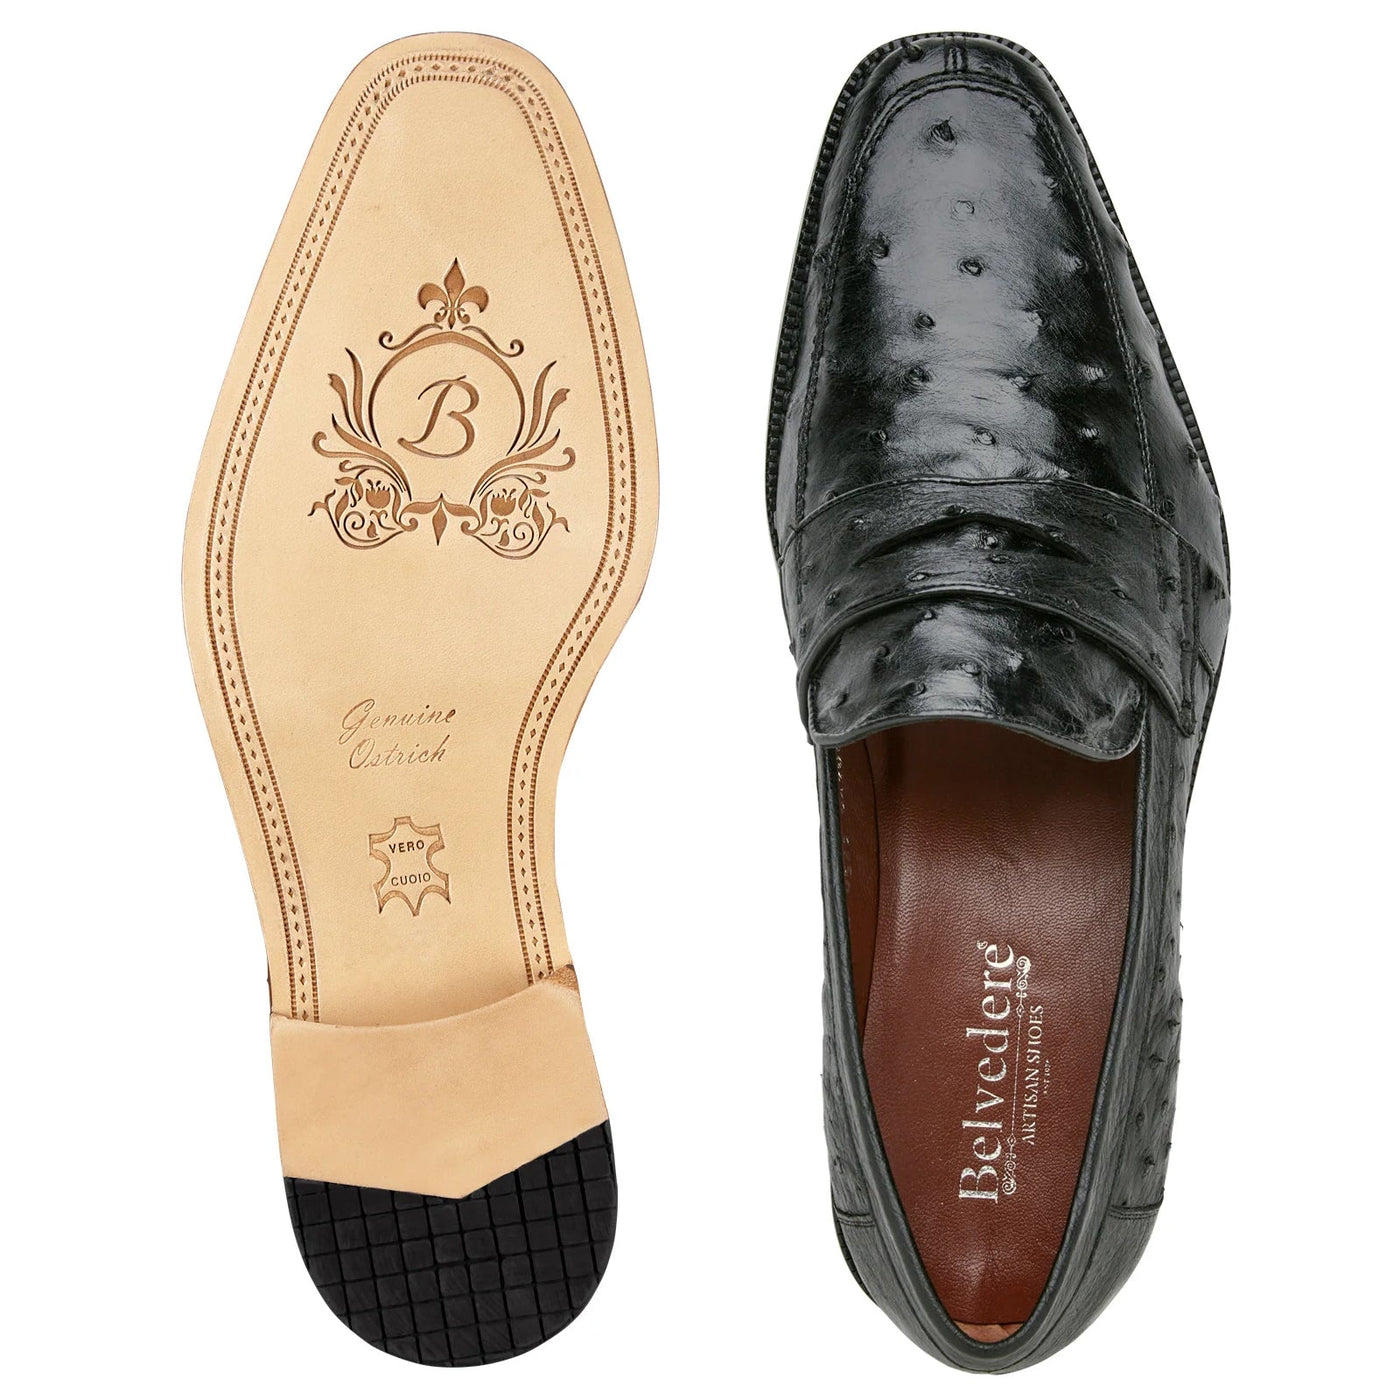 Men's Belvedere Espada Ostrich Quill Penny Loafer Dress Shoe in Black